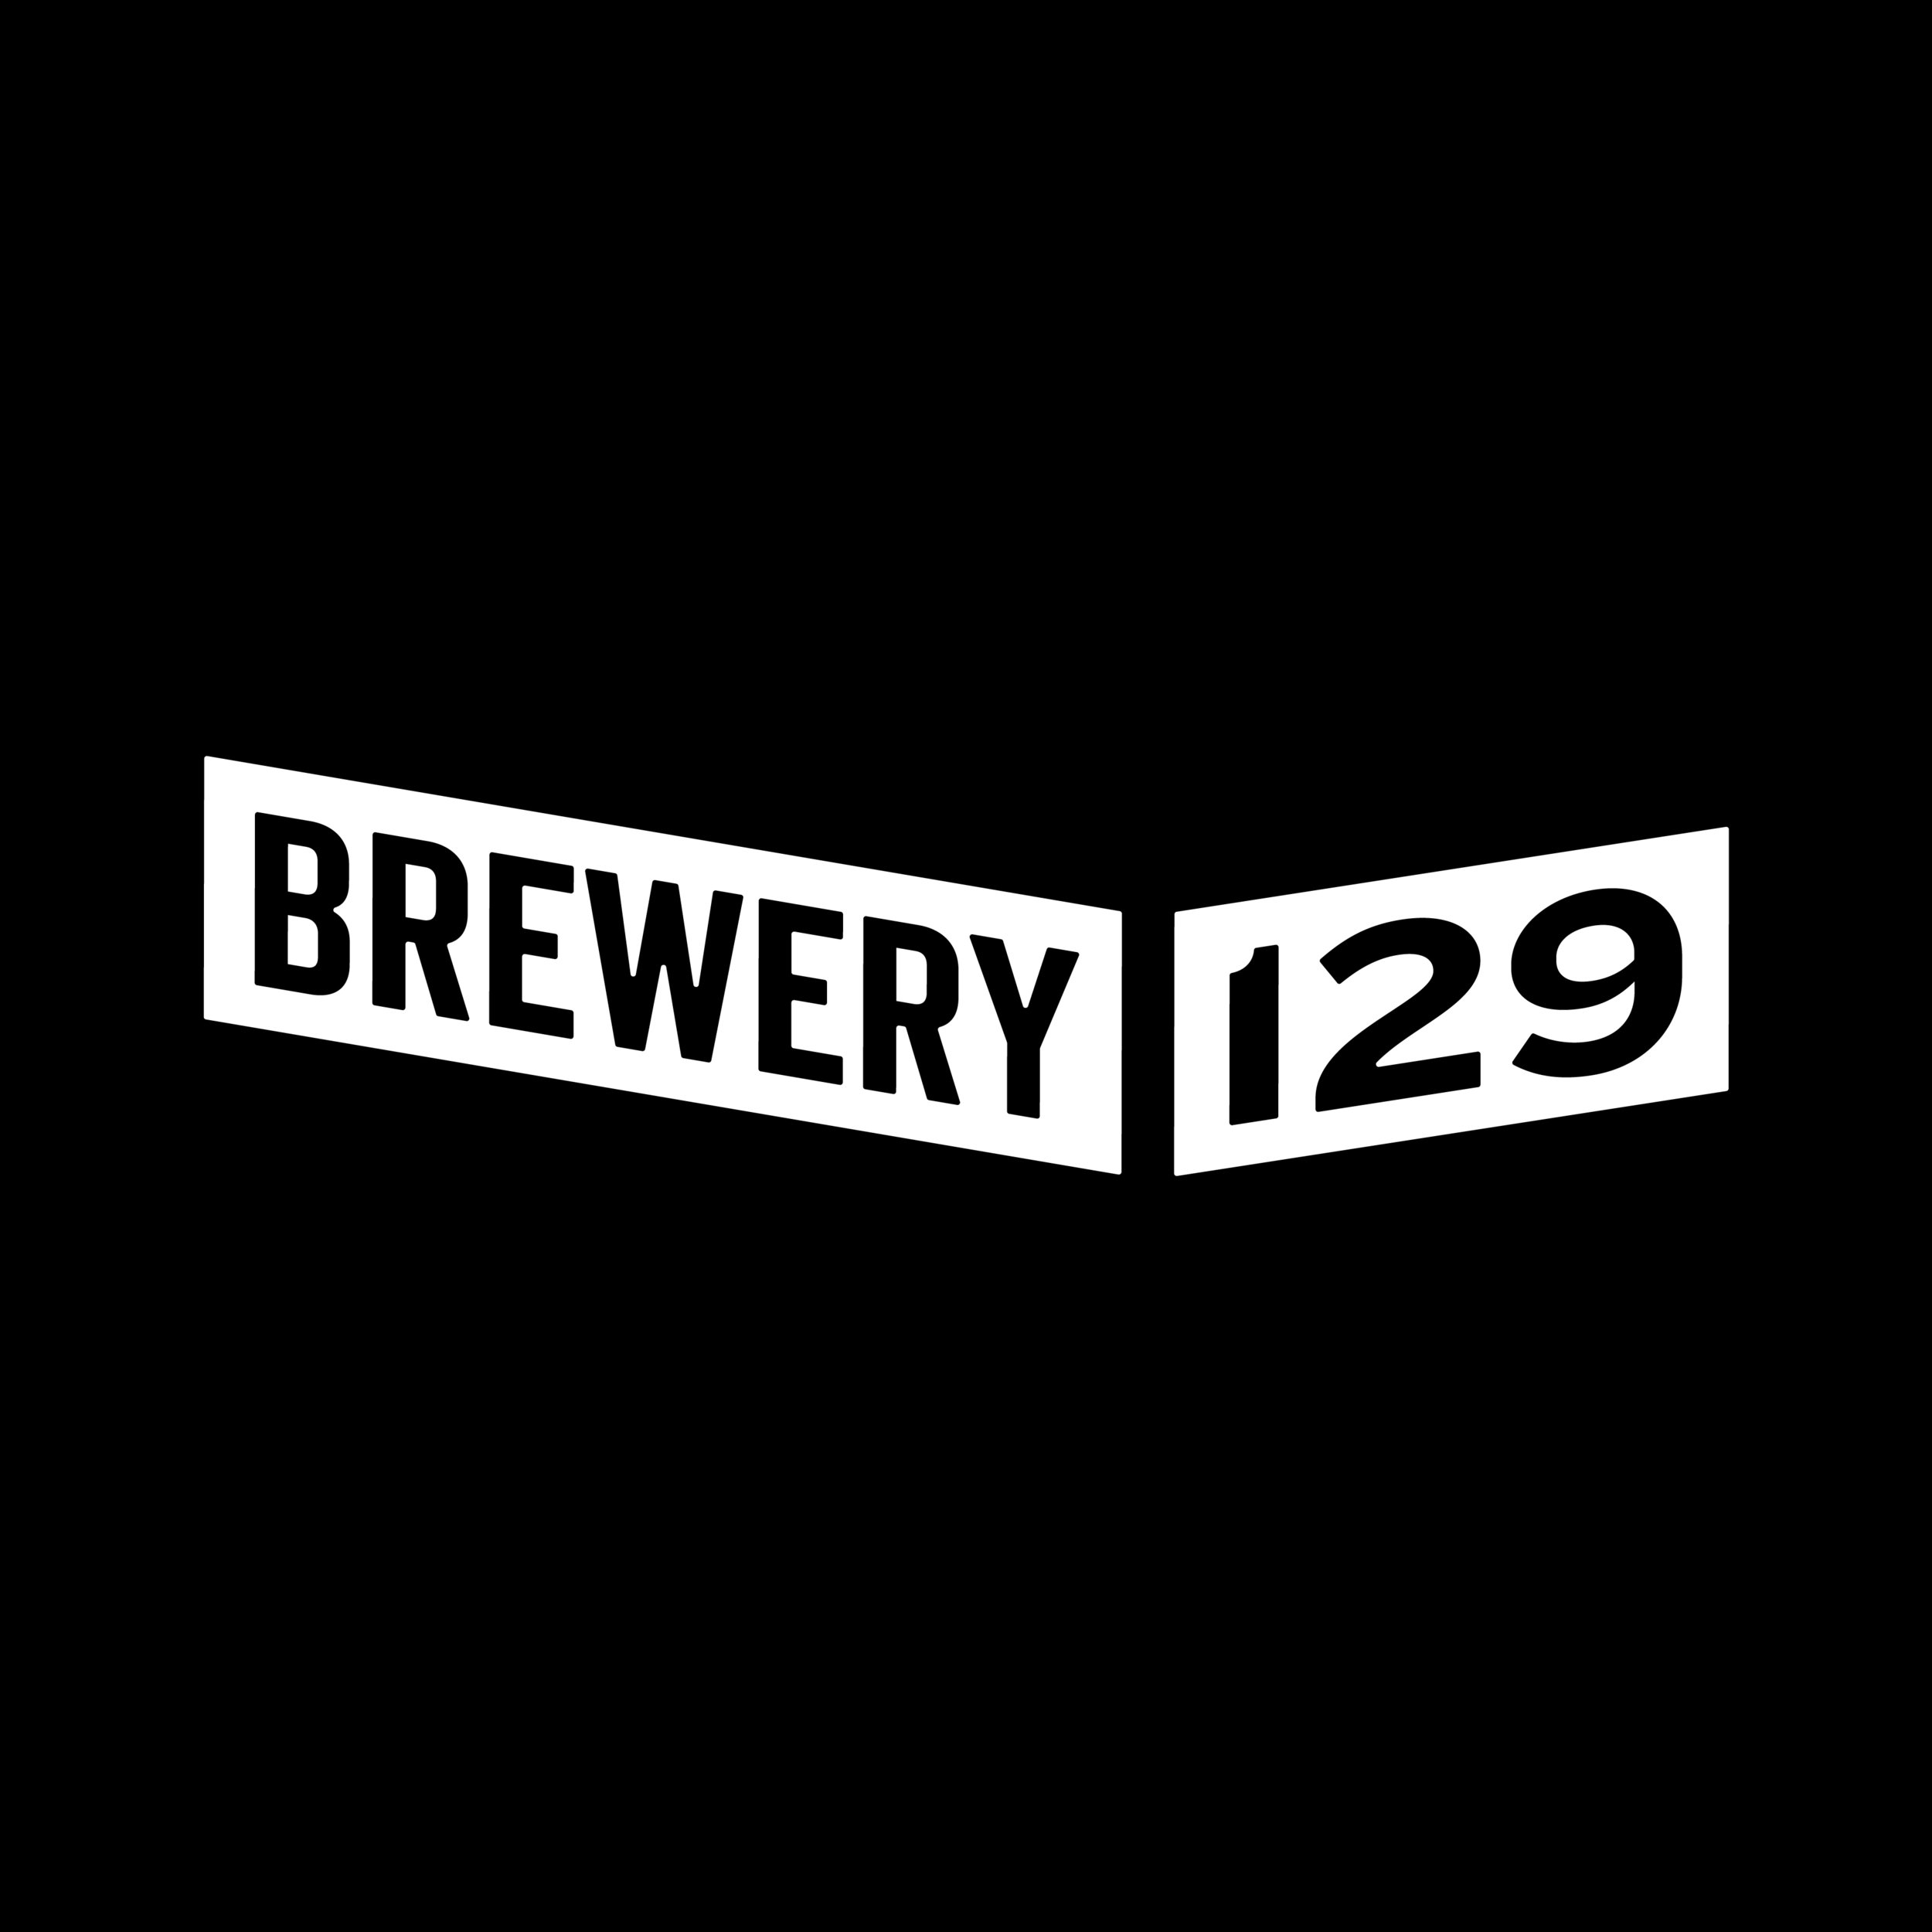 Brewery129 Logos-03.jpg